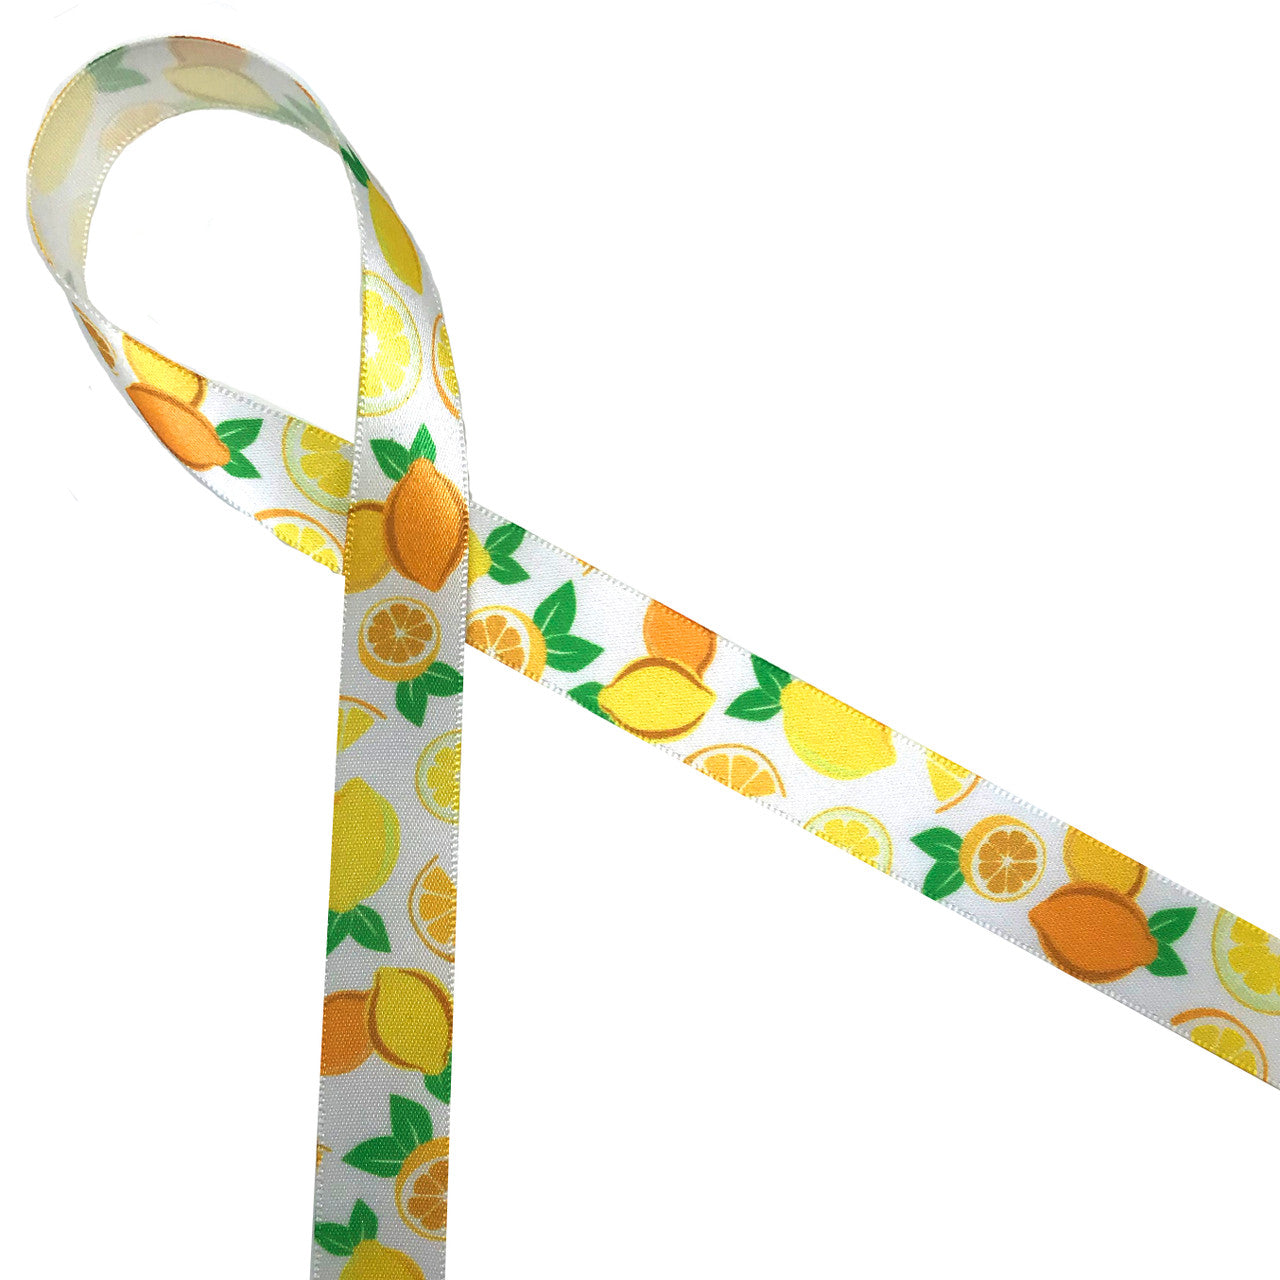 Lemons ribbon printed on 5/8" white single face satin